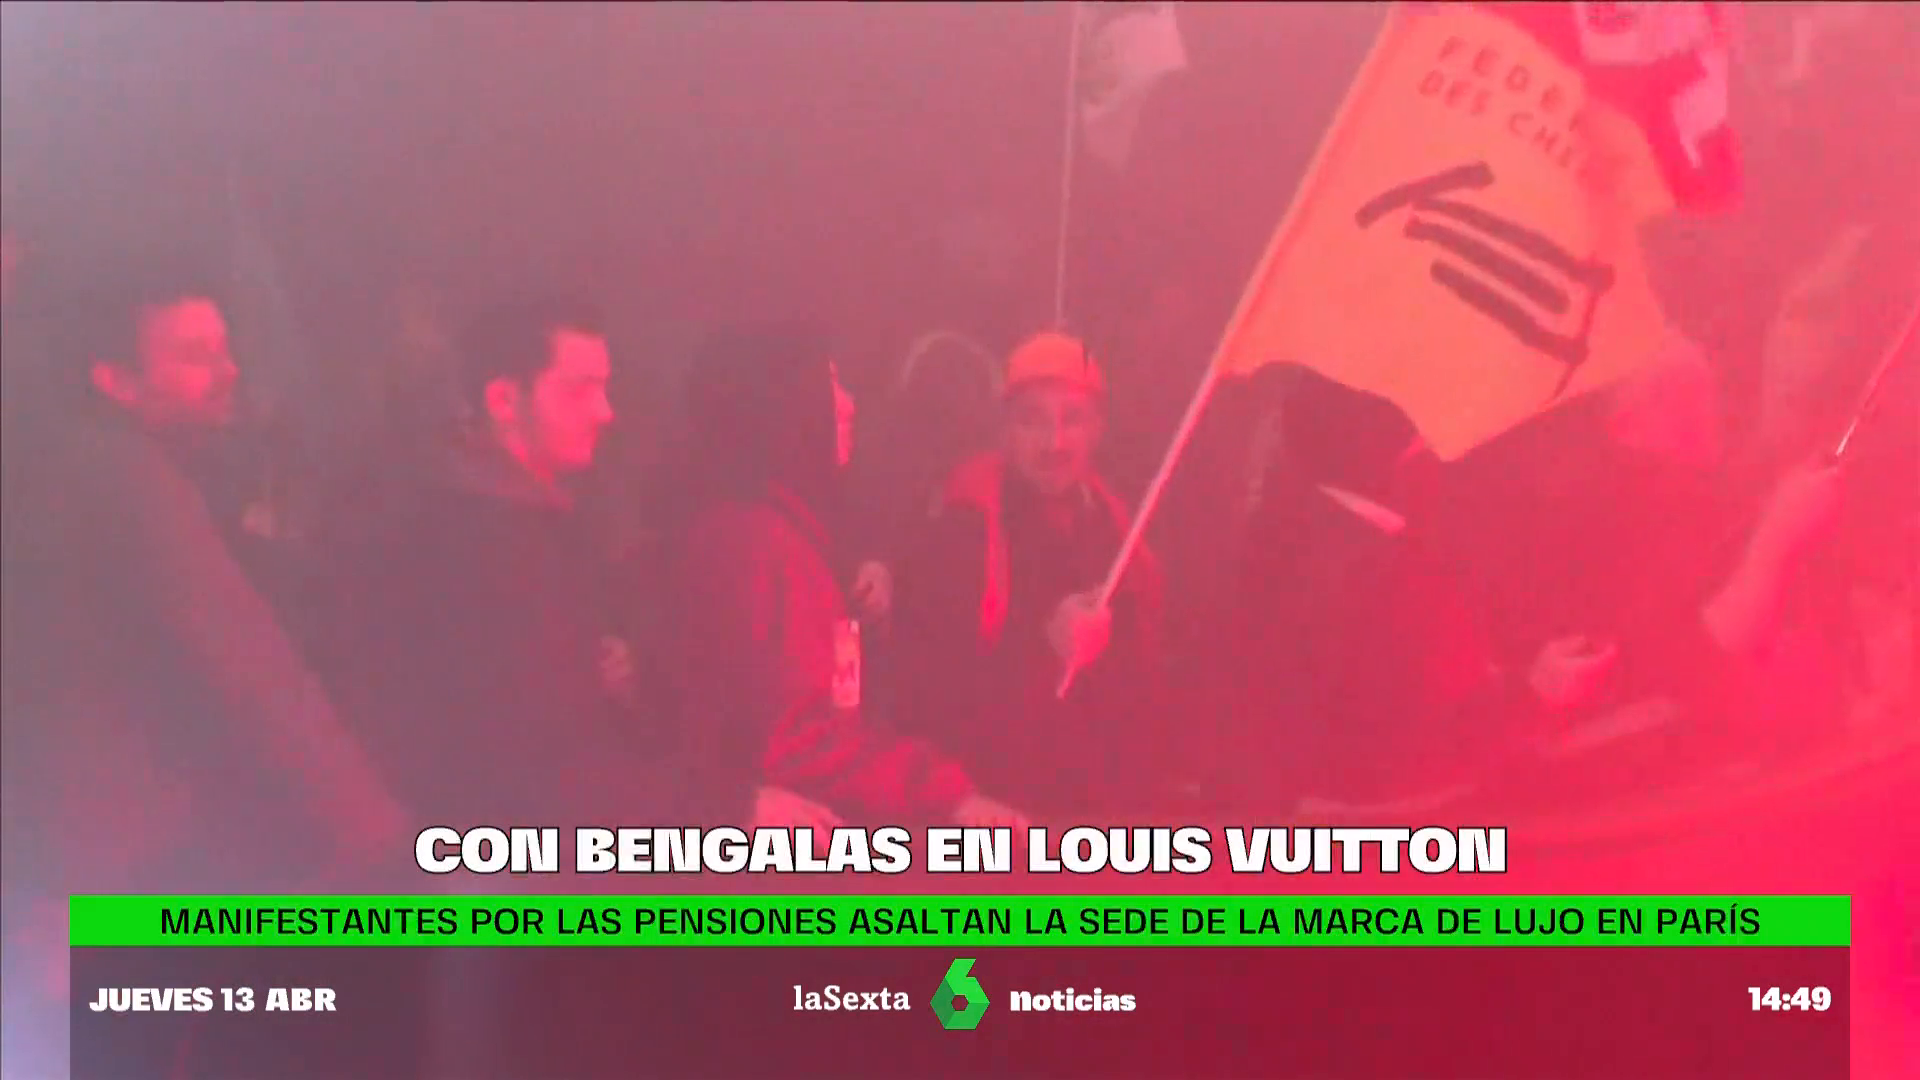 BREAKING NEWS: Manifestantes en París asaltan sede de la dueña de Louis  Vuitton 